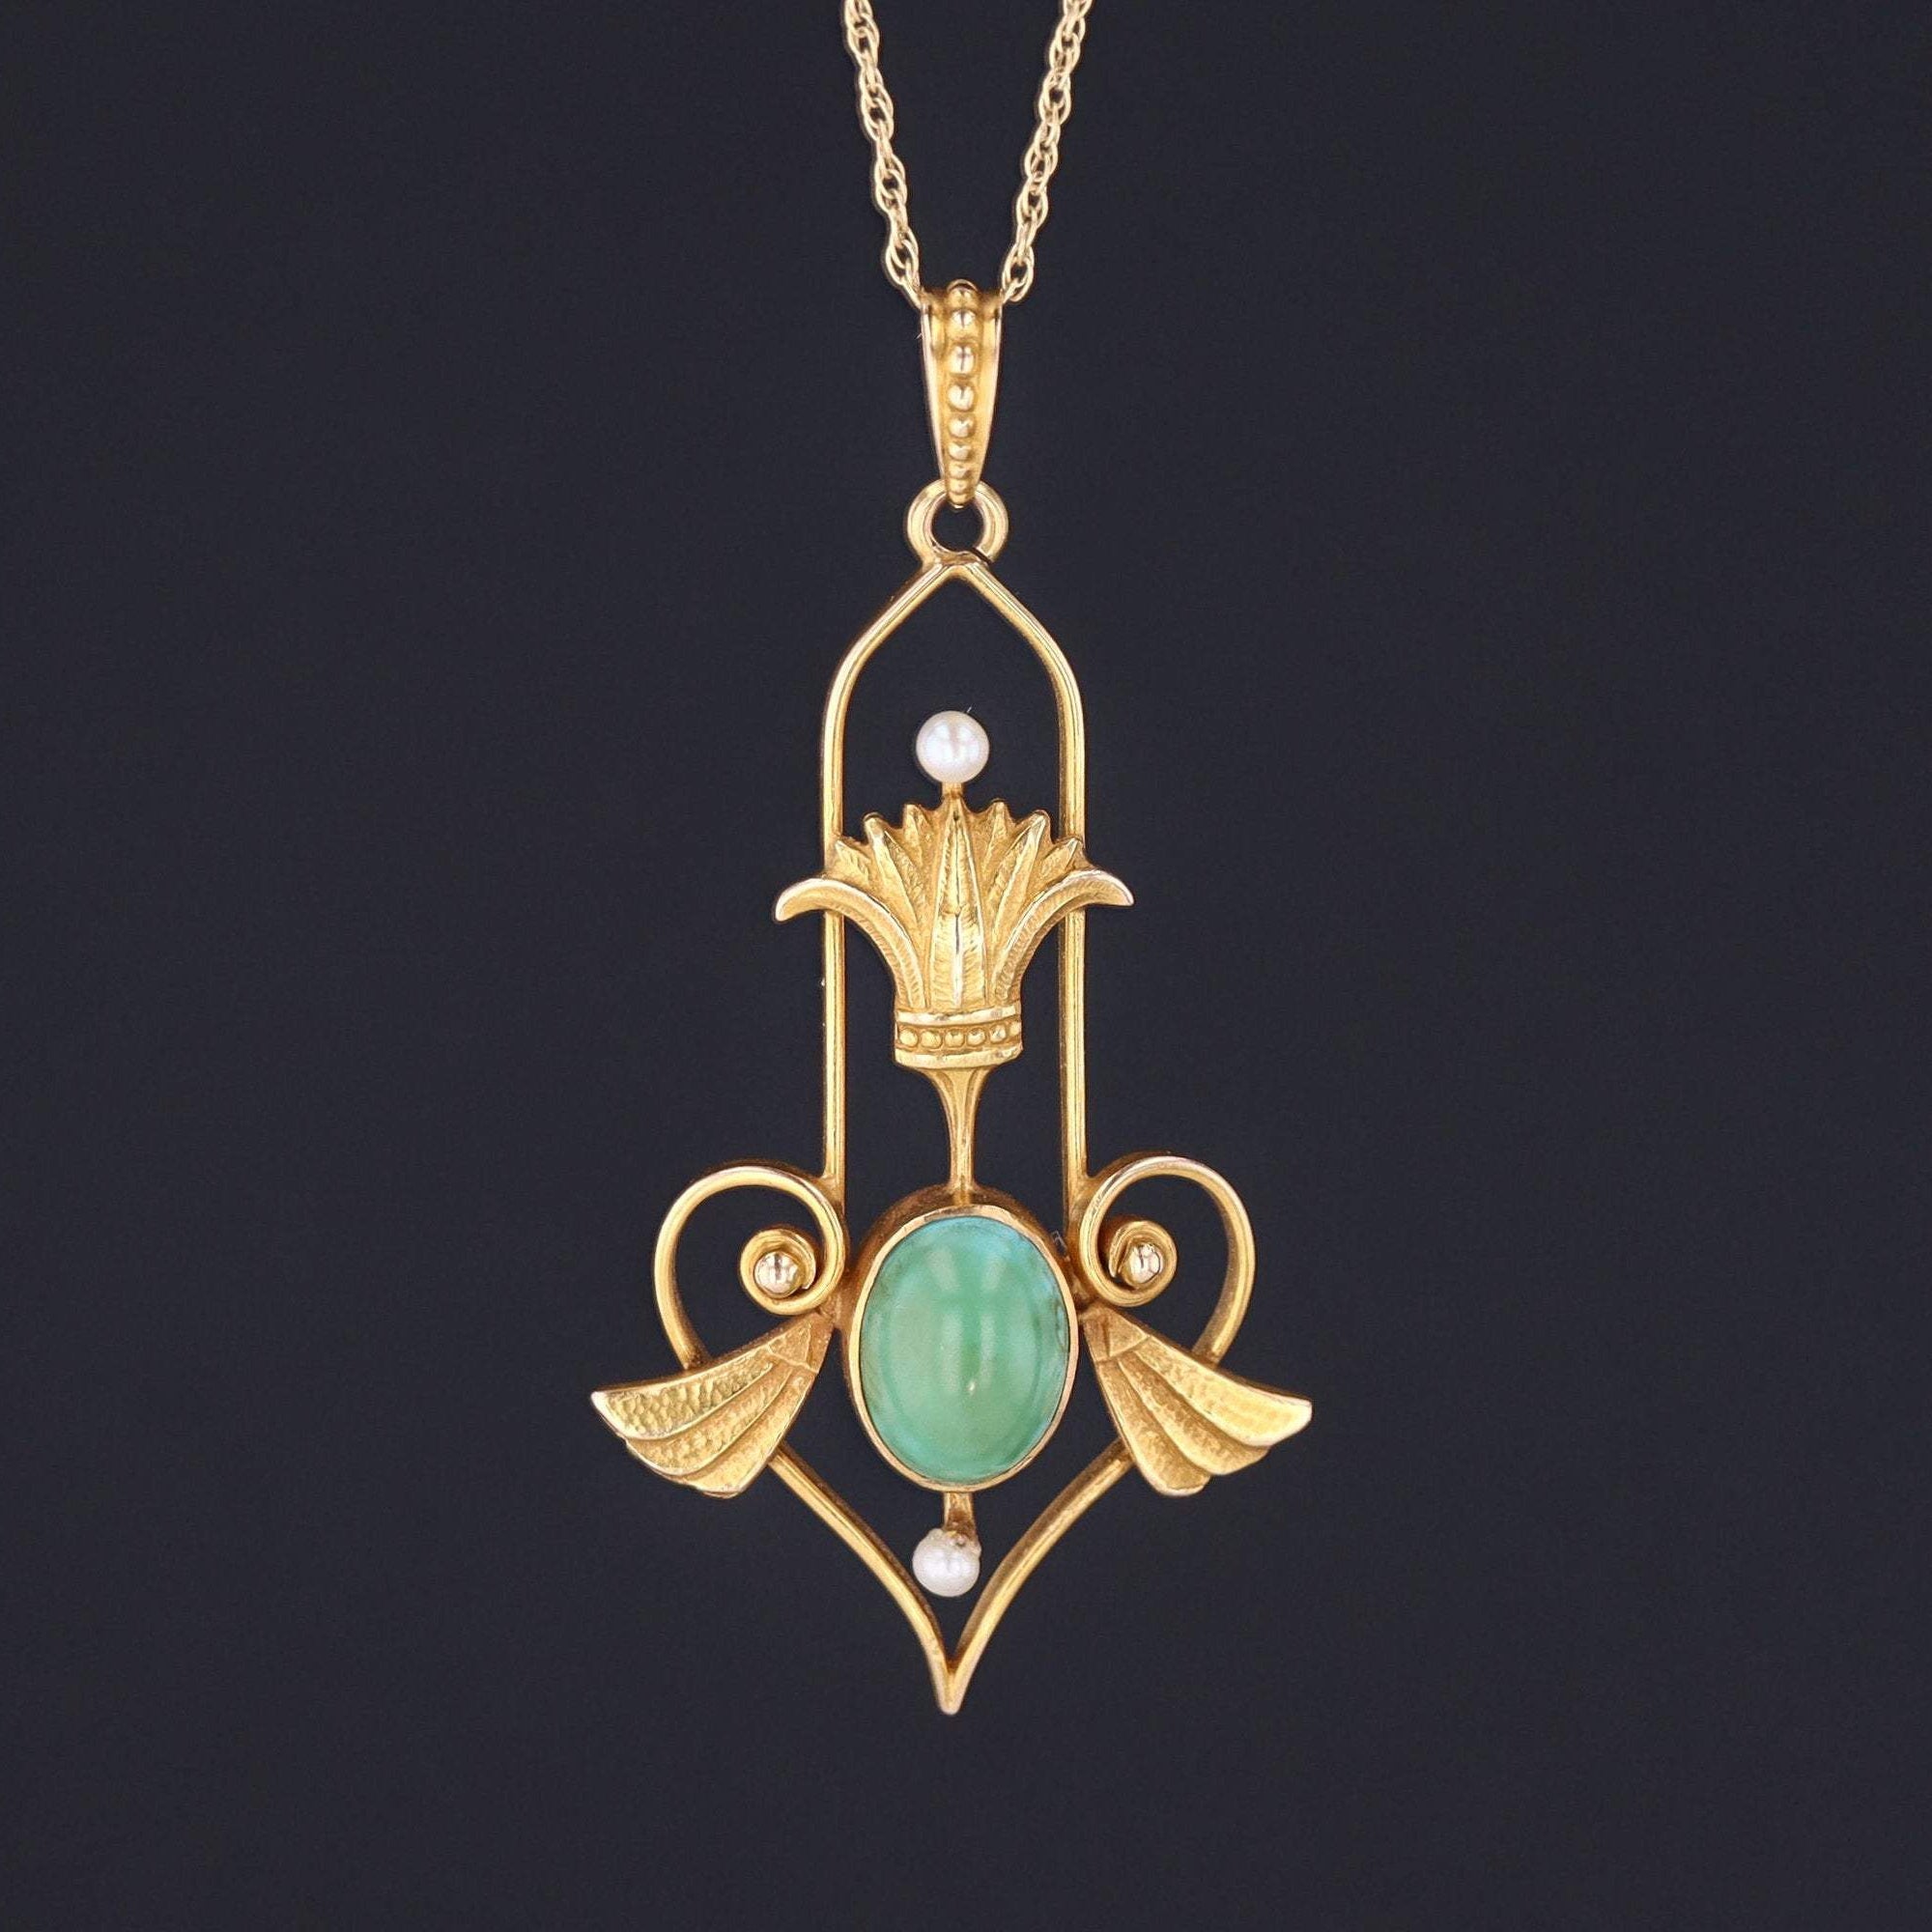 Egyptian Revival Pendant | Antique Gold & Turquoise Pendant | 14k Pendant on Optional 14k Chain